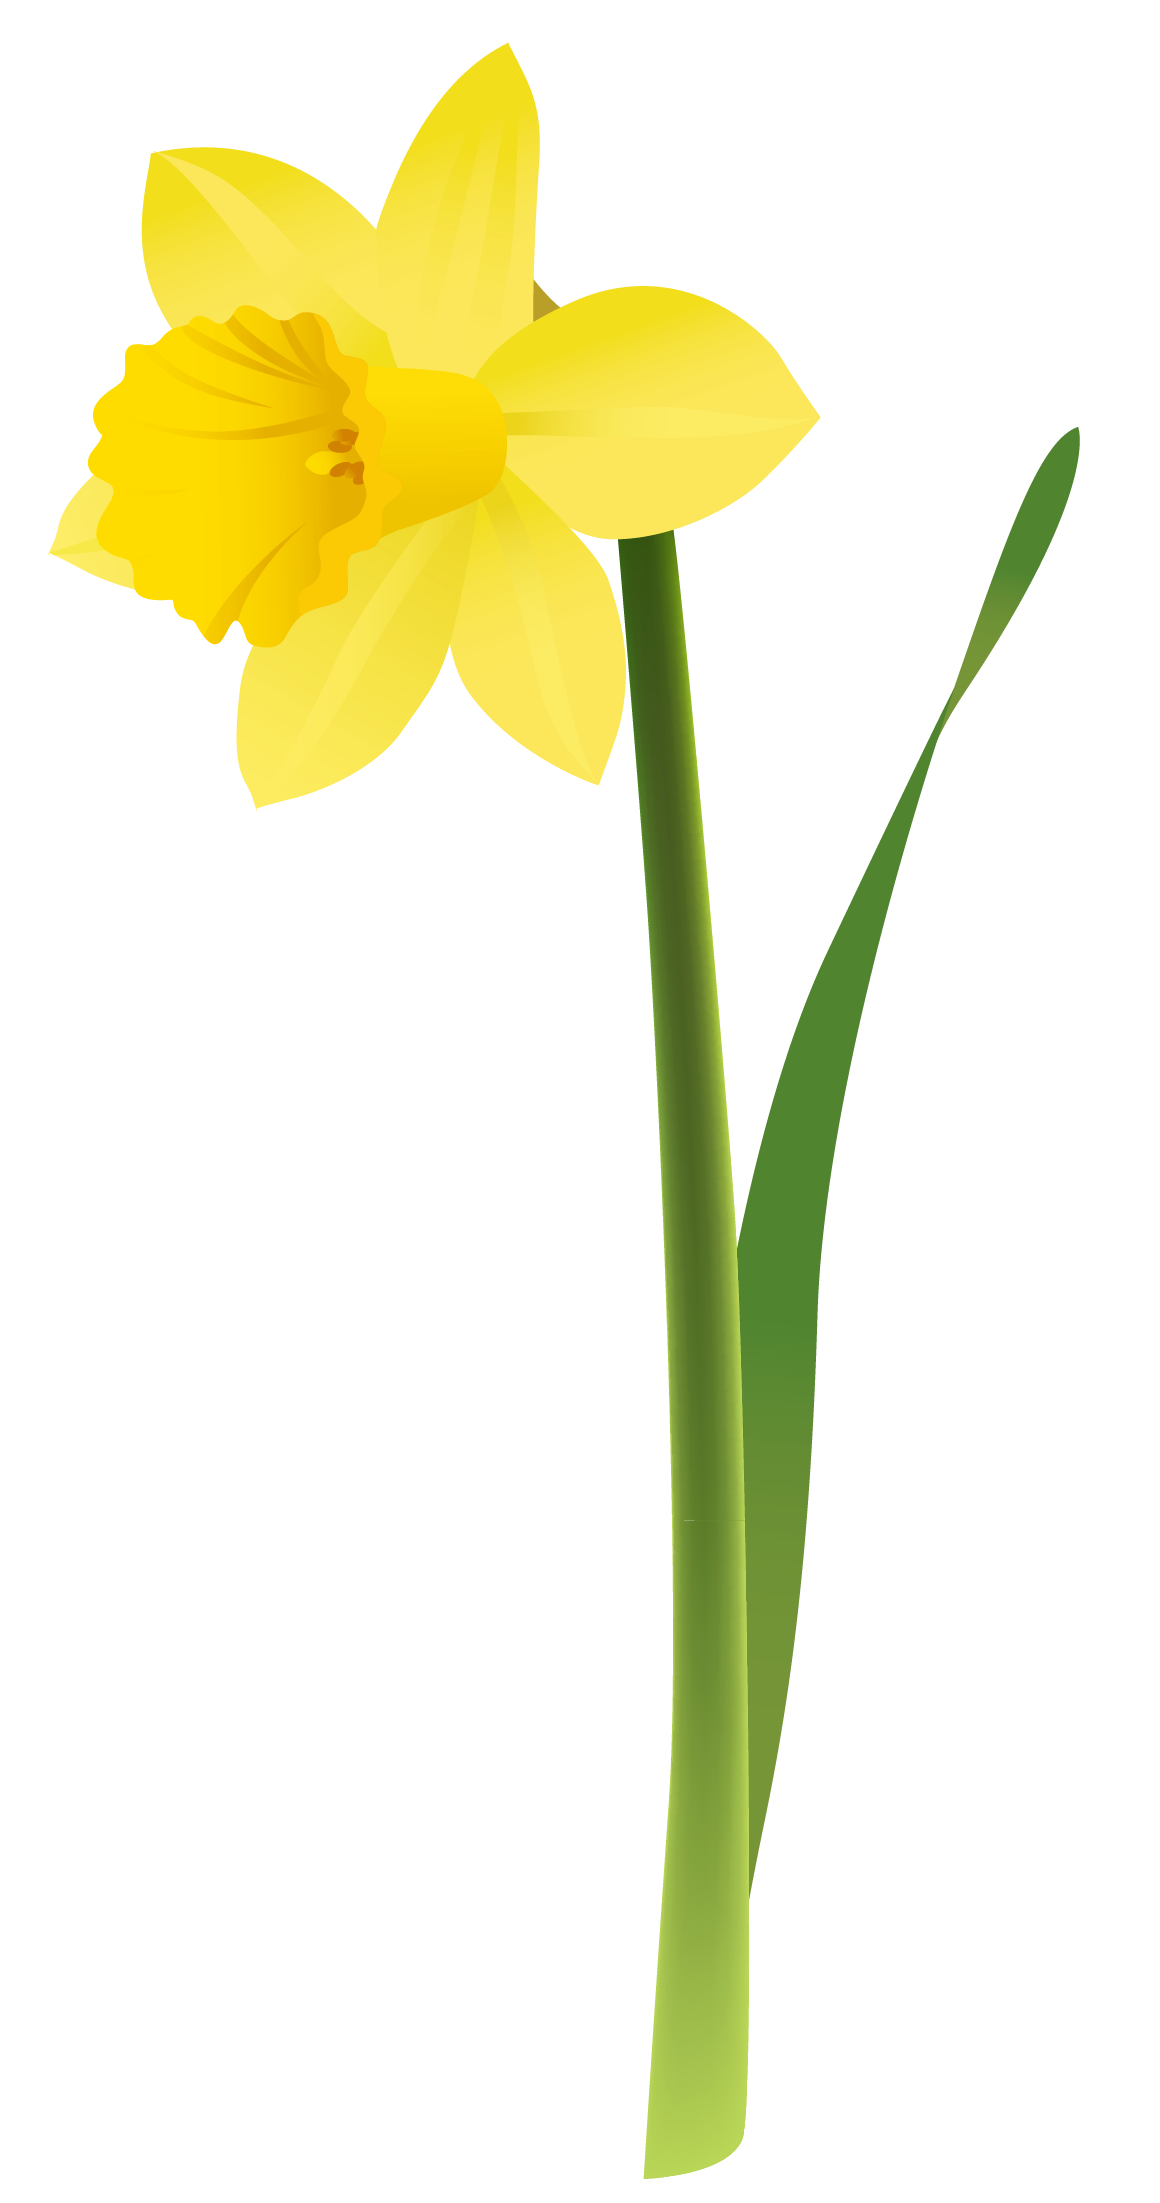 Yellow Daffodils Clipart | Gratitude | Pinterest | Daffodils, Clip ...